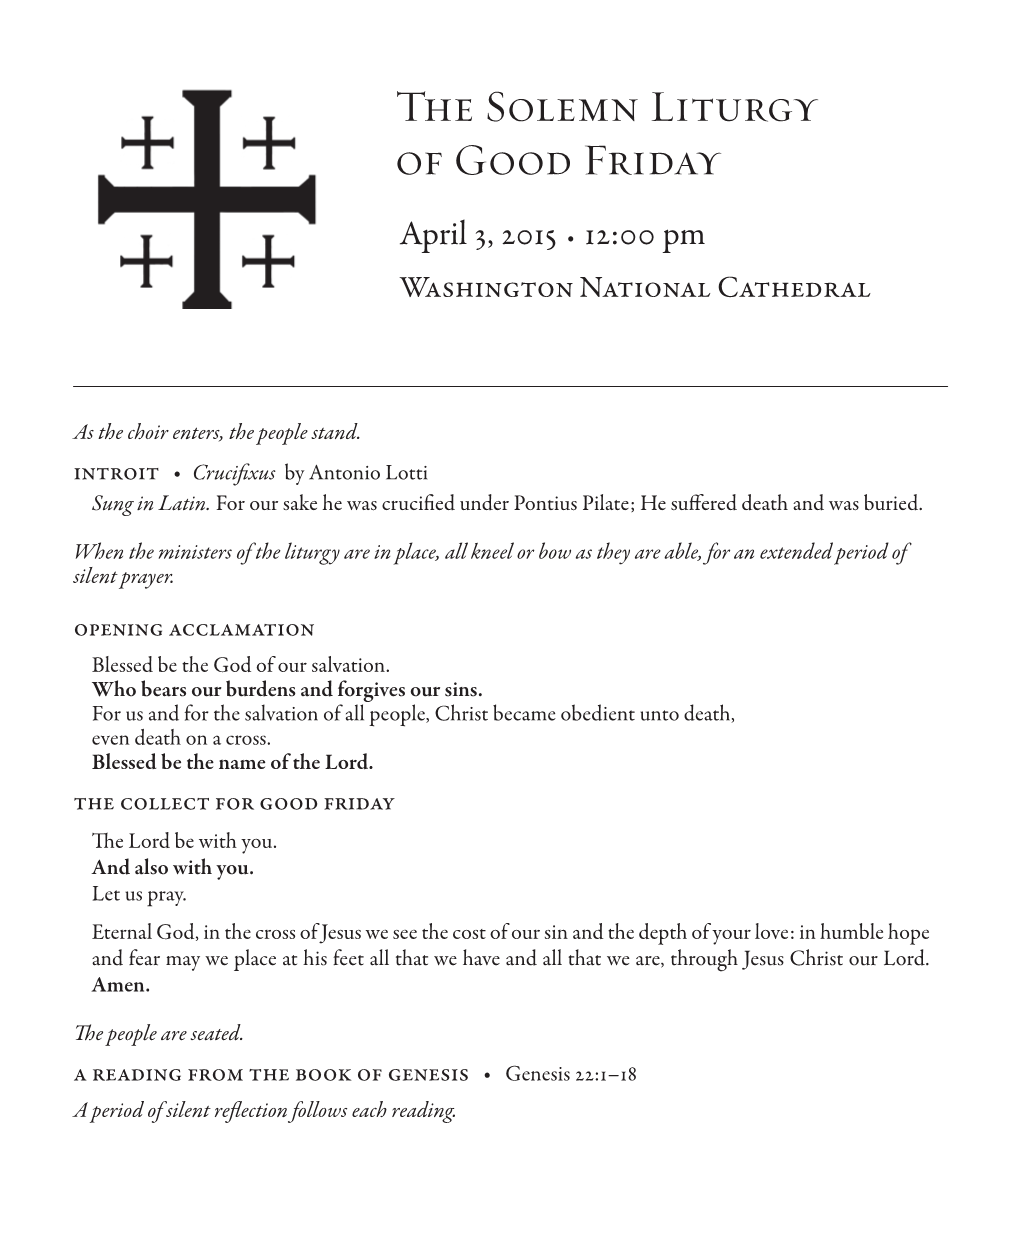 The Solemn Liturgy of Good Friday